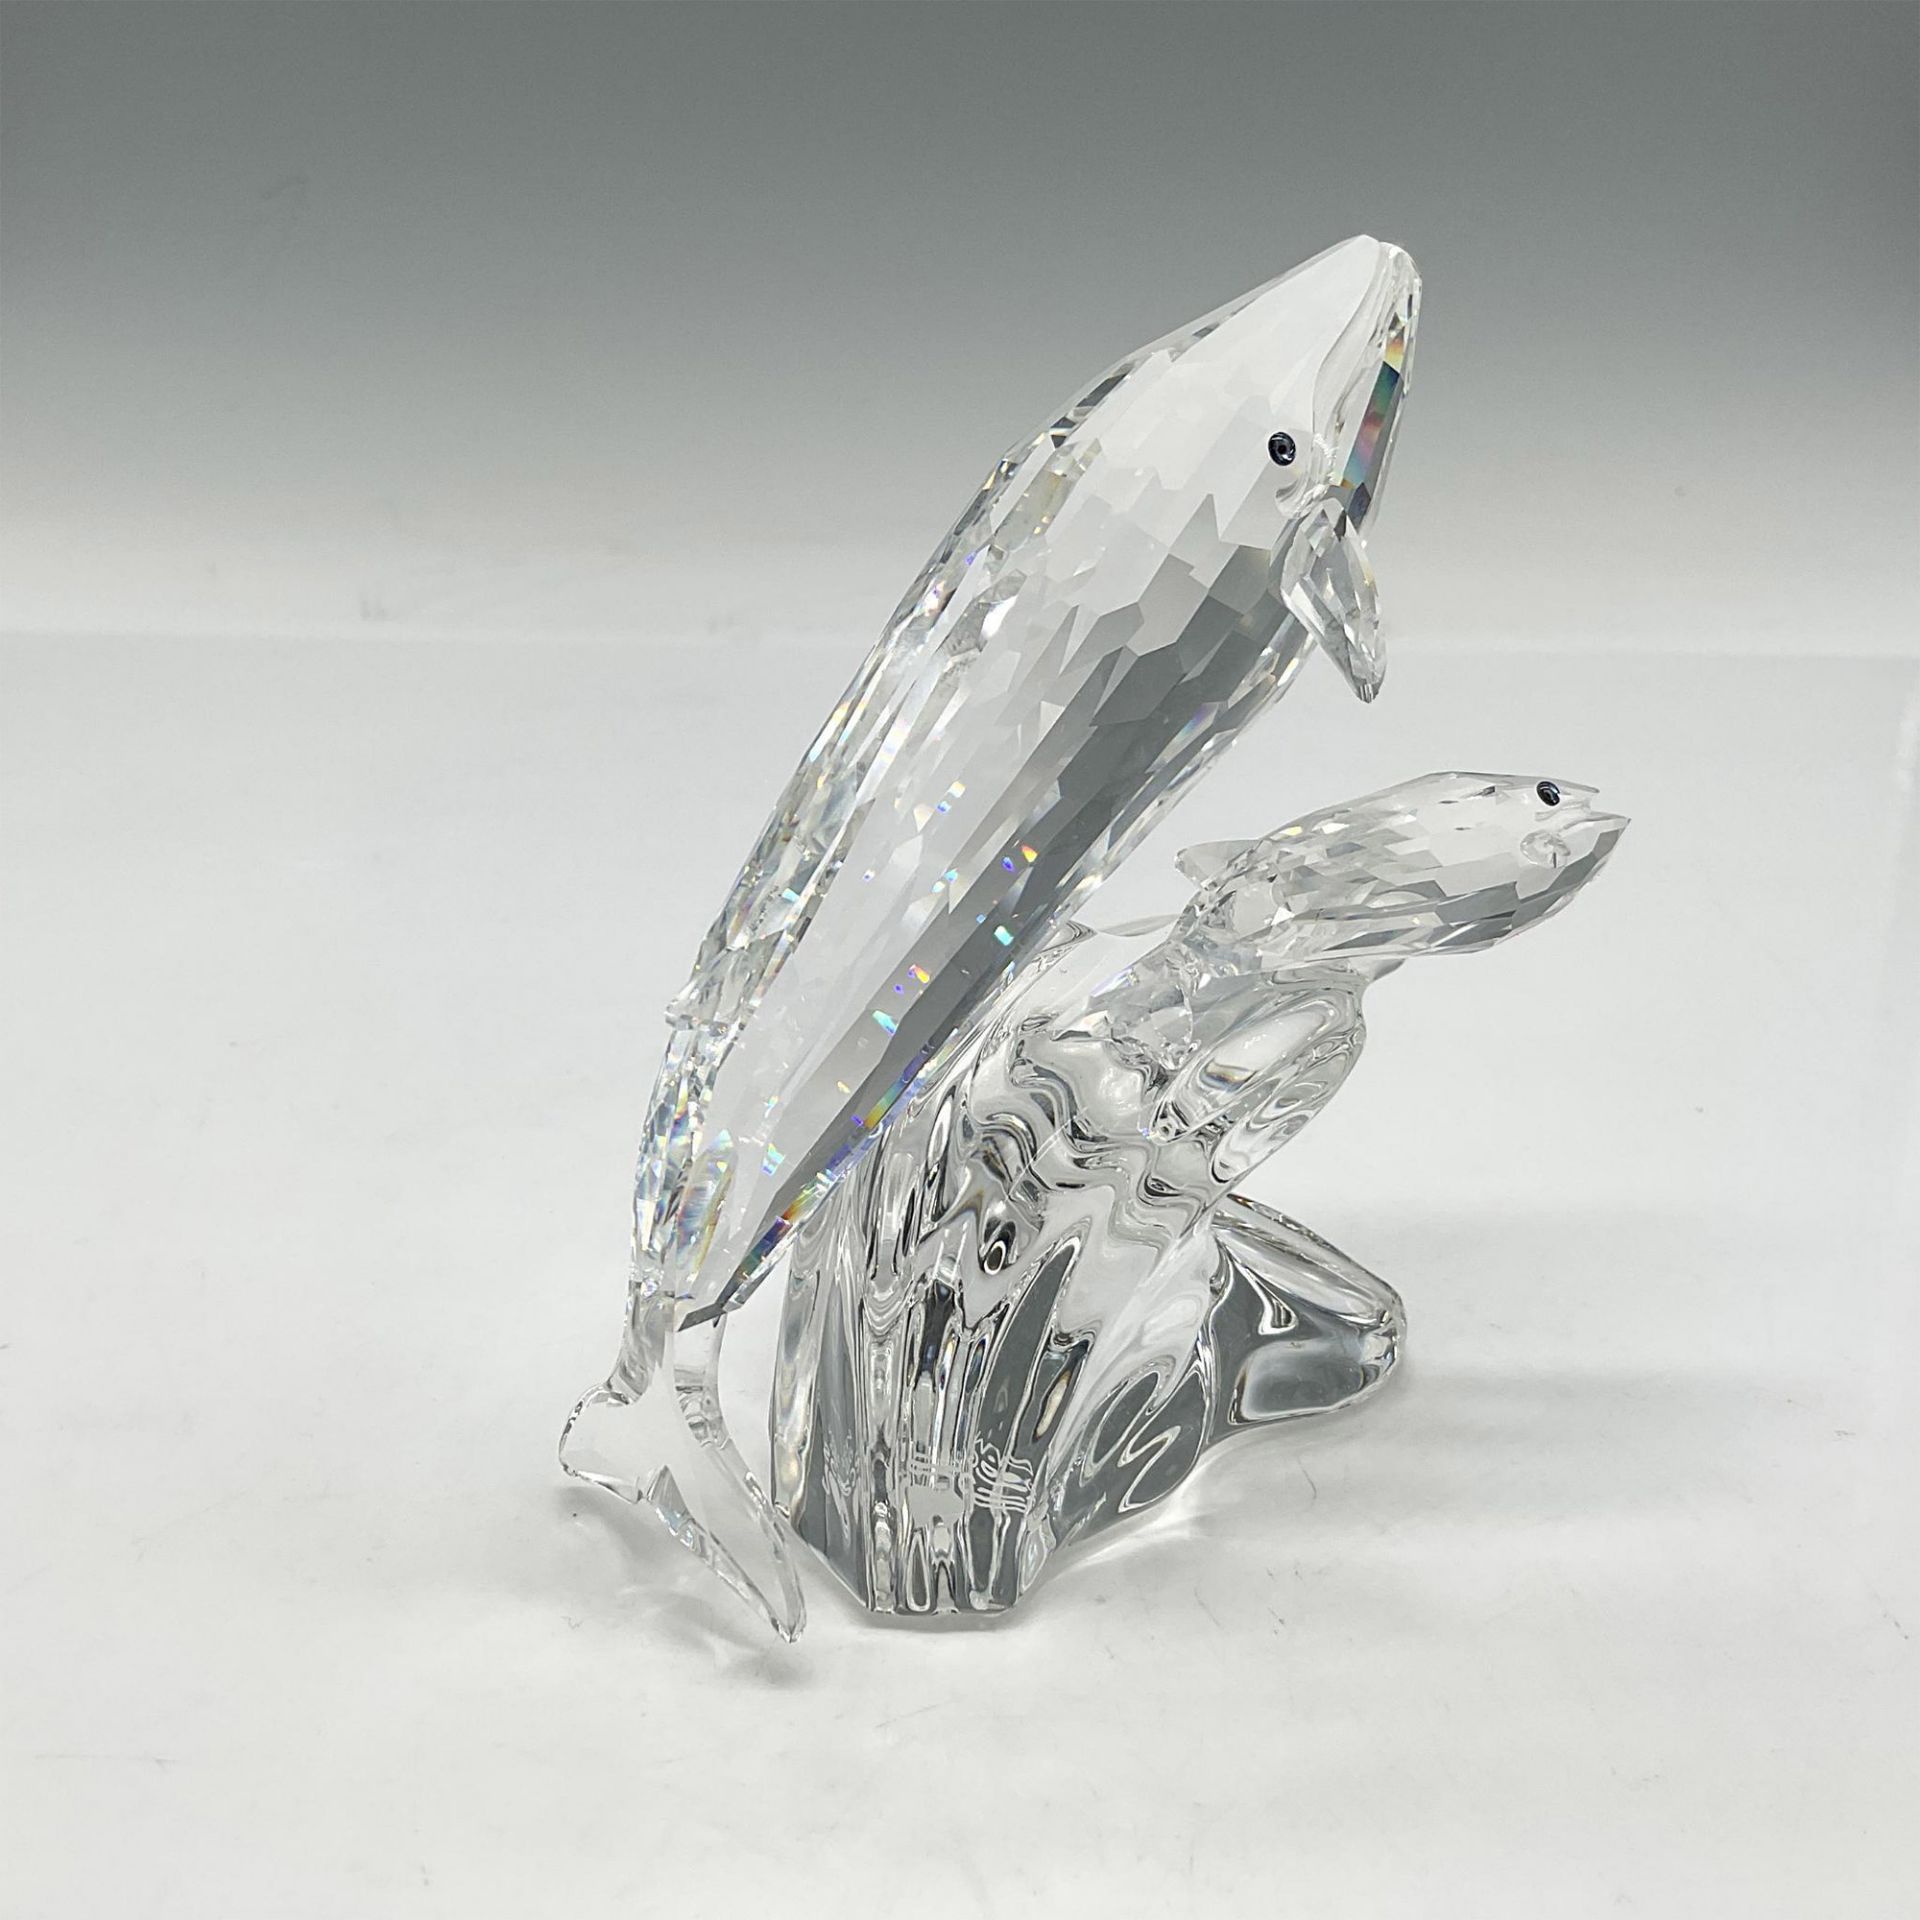 Swarovski SCS Figurine, Whales Care for Me - Image 2 of 3